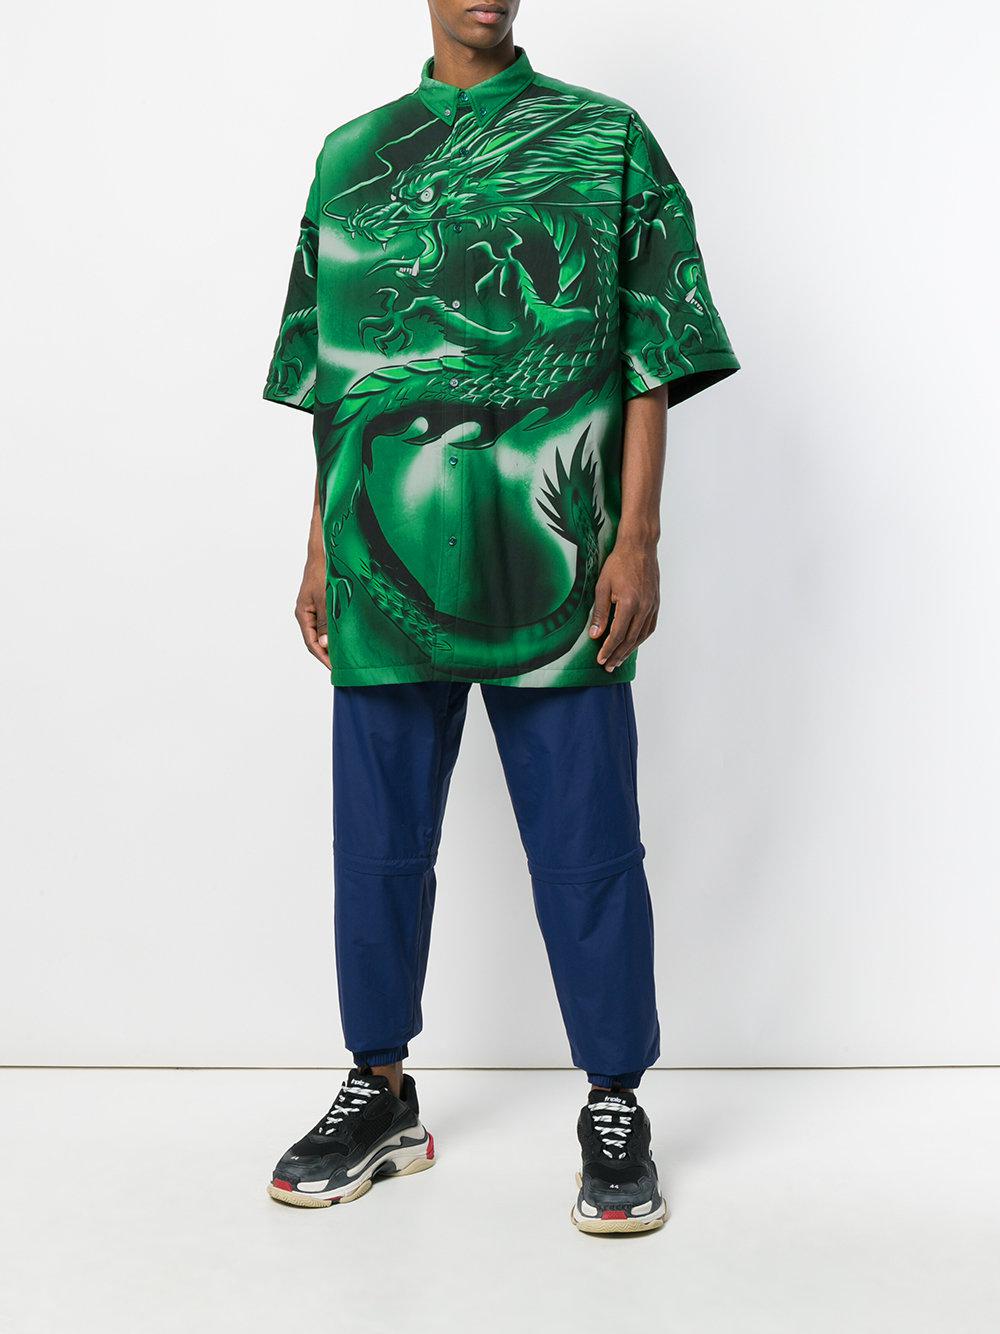 Balenciaga Cotton Bal Dragon Shirt in Green for Men - Lyst